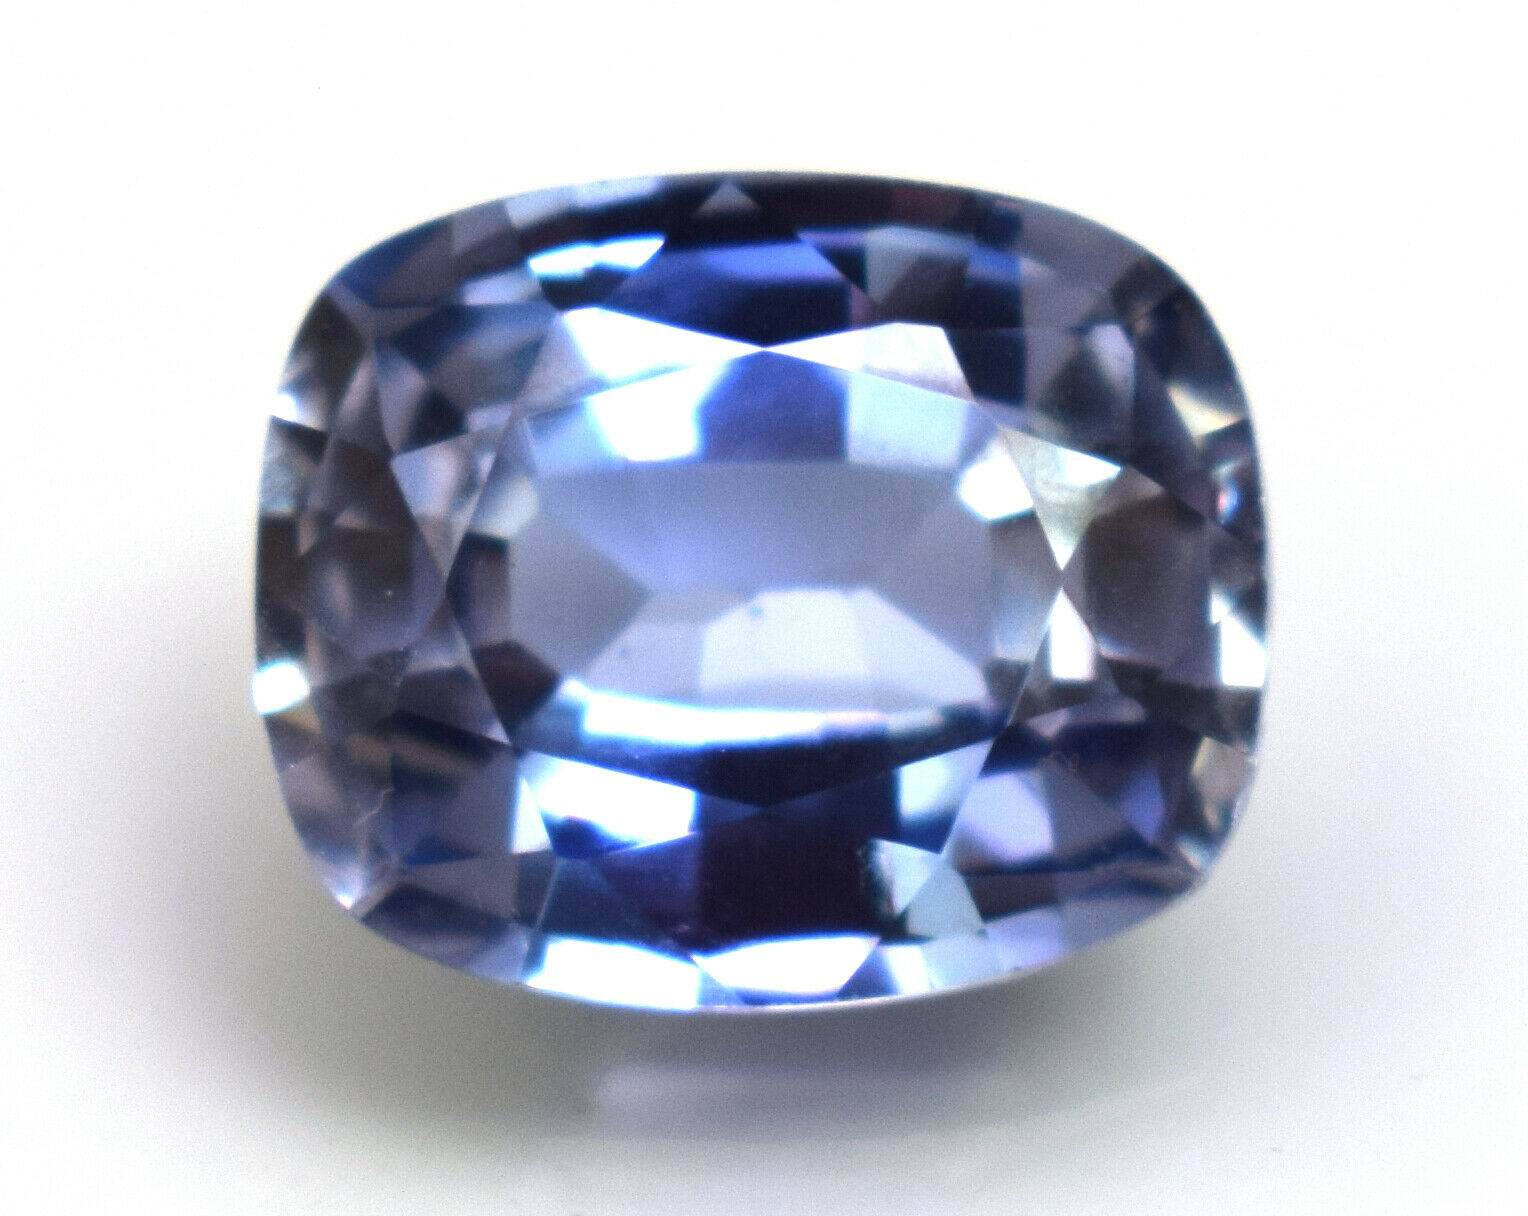 Natural Kashmir Blue Sapphire Certified 4.35 Ct Cushion Cut Loose Gem For Ring